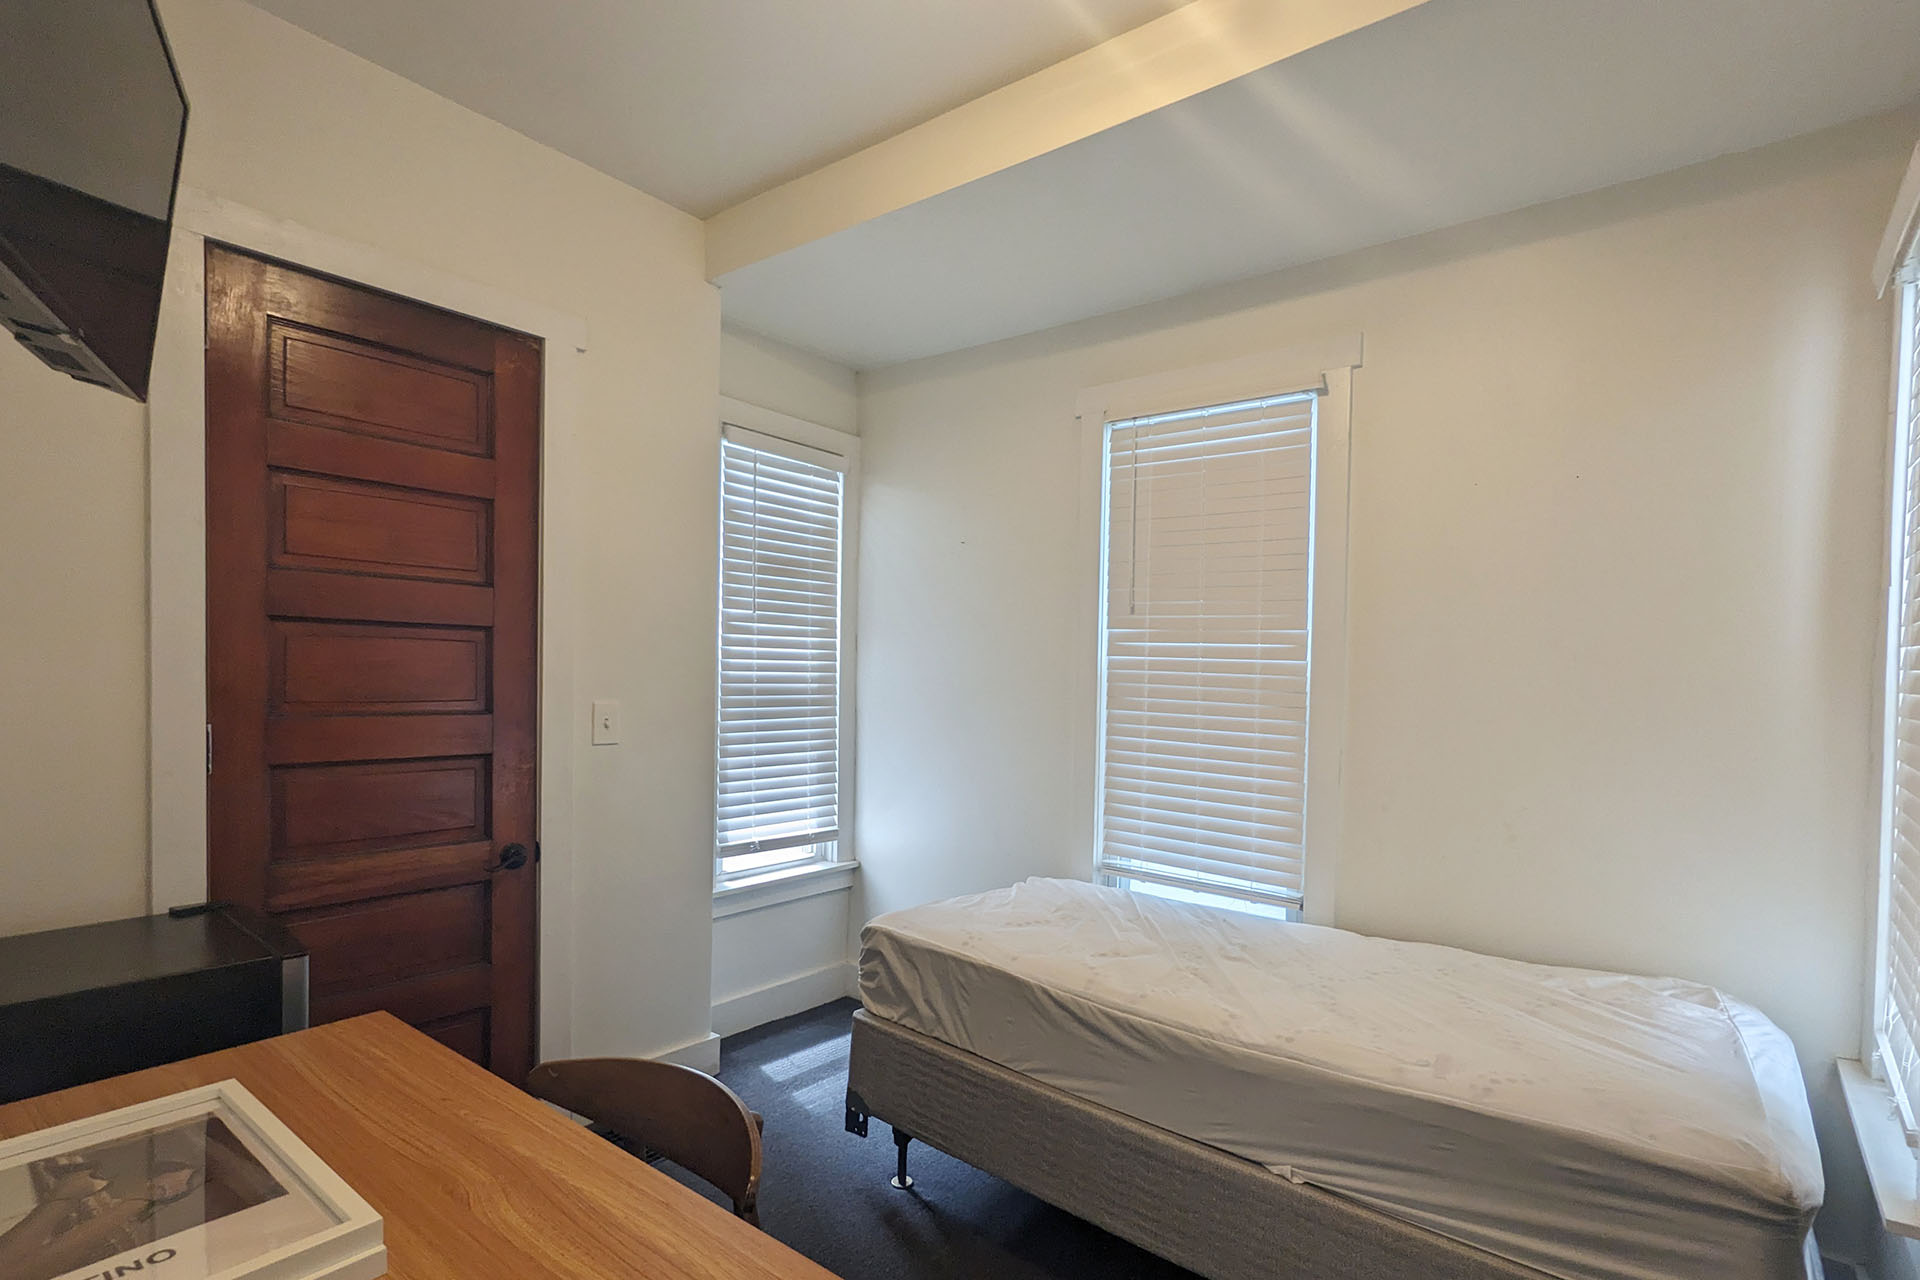 Bedroom at 39 Frank St.